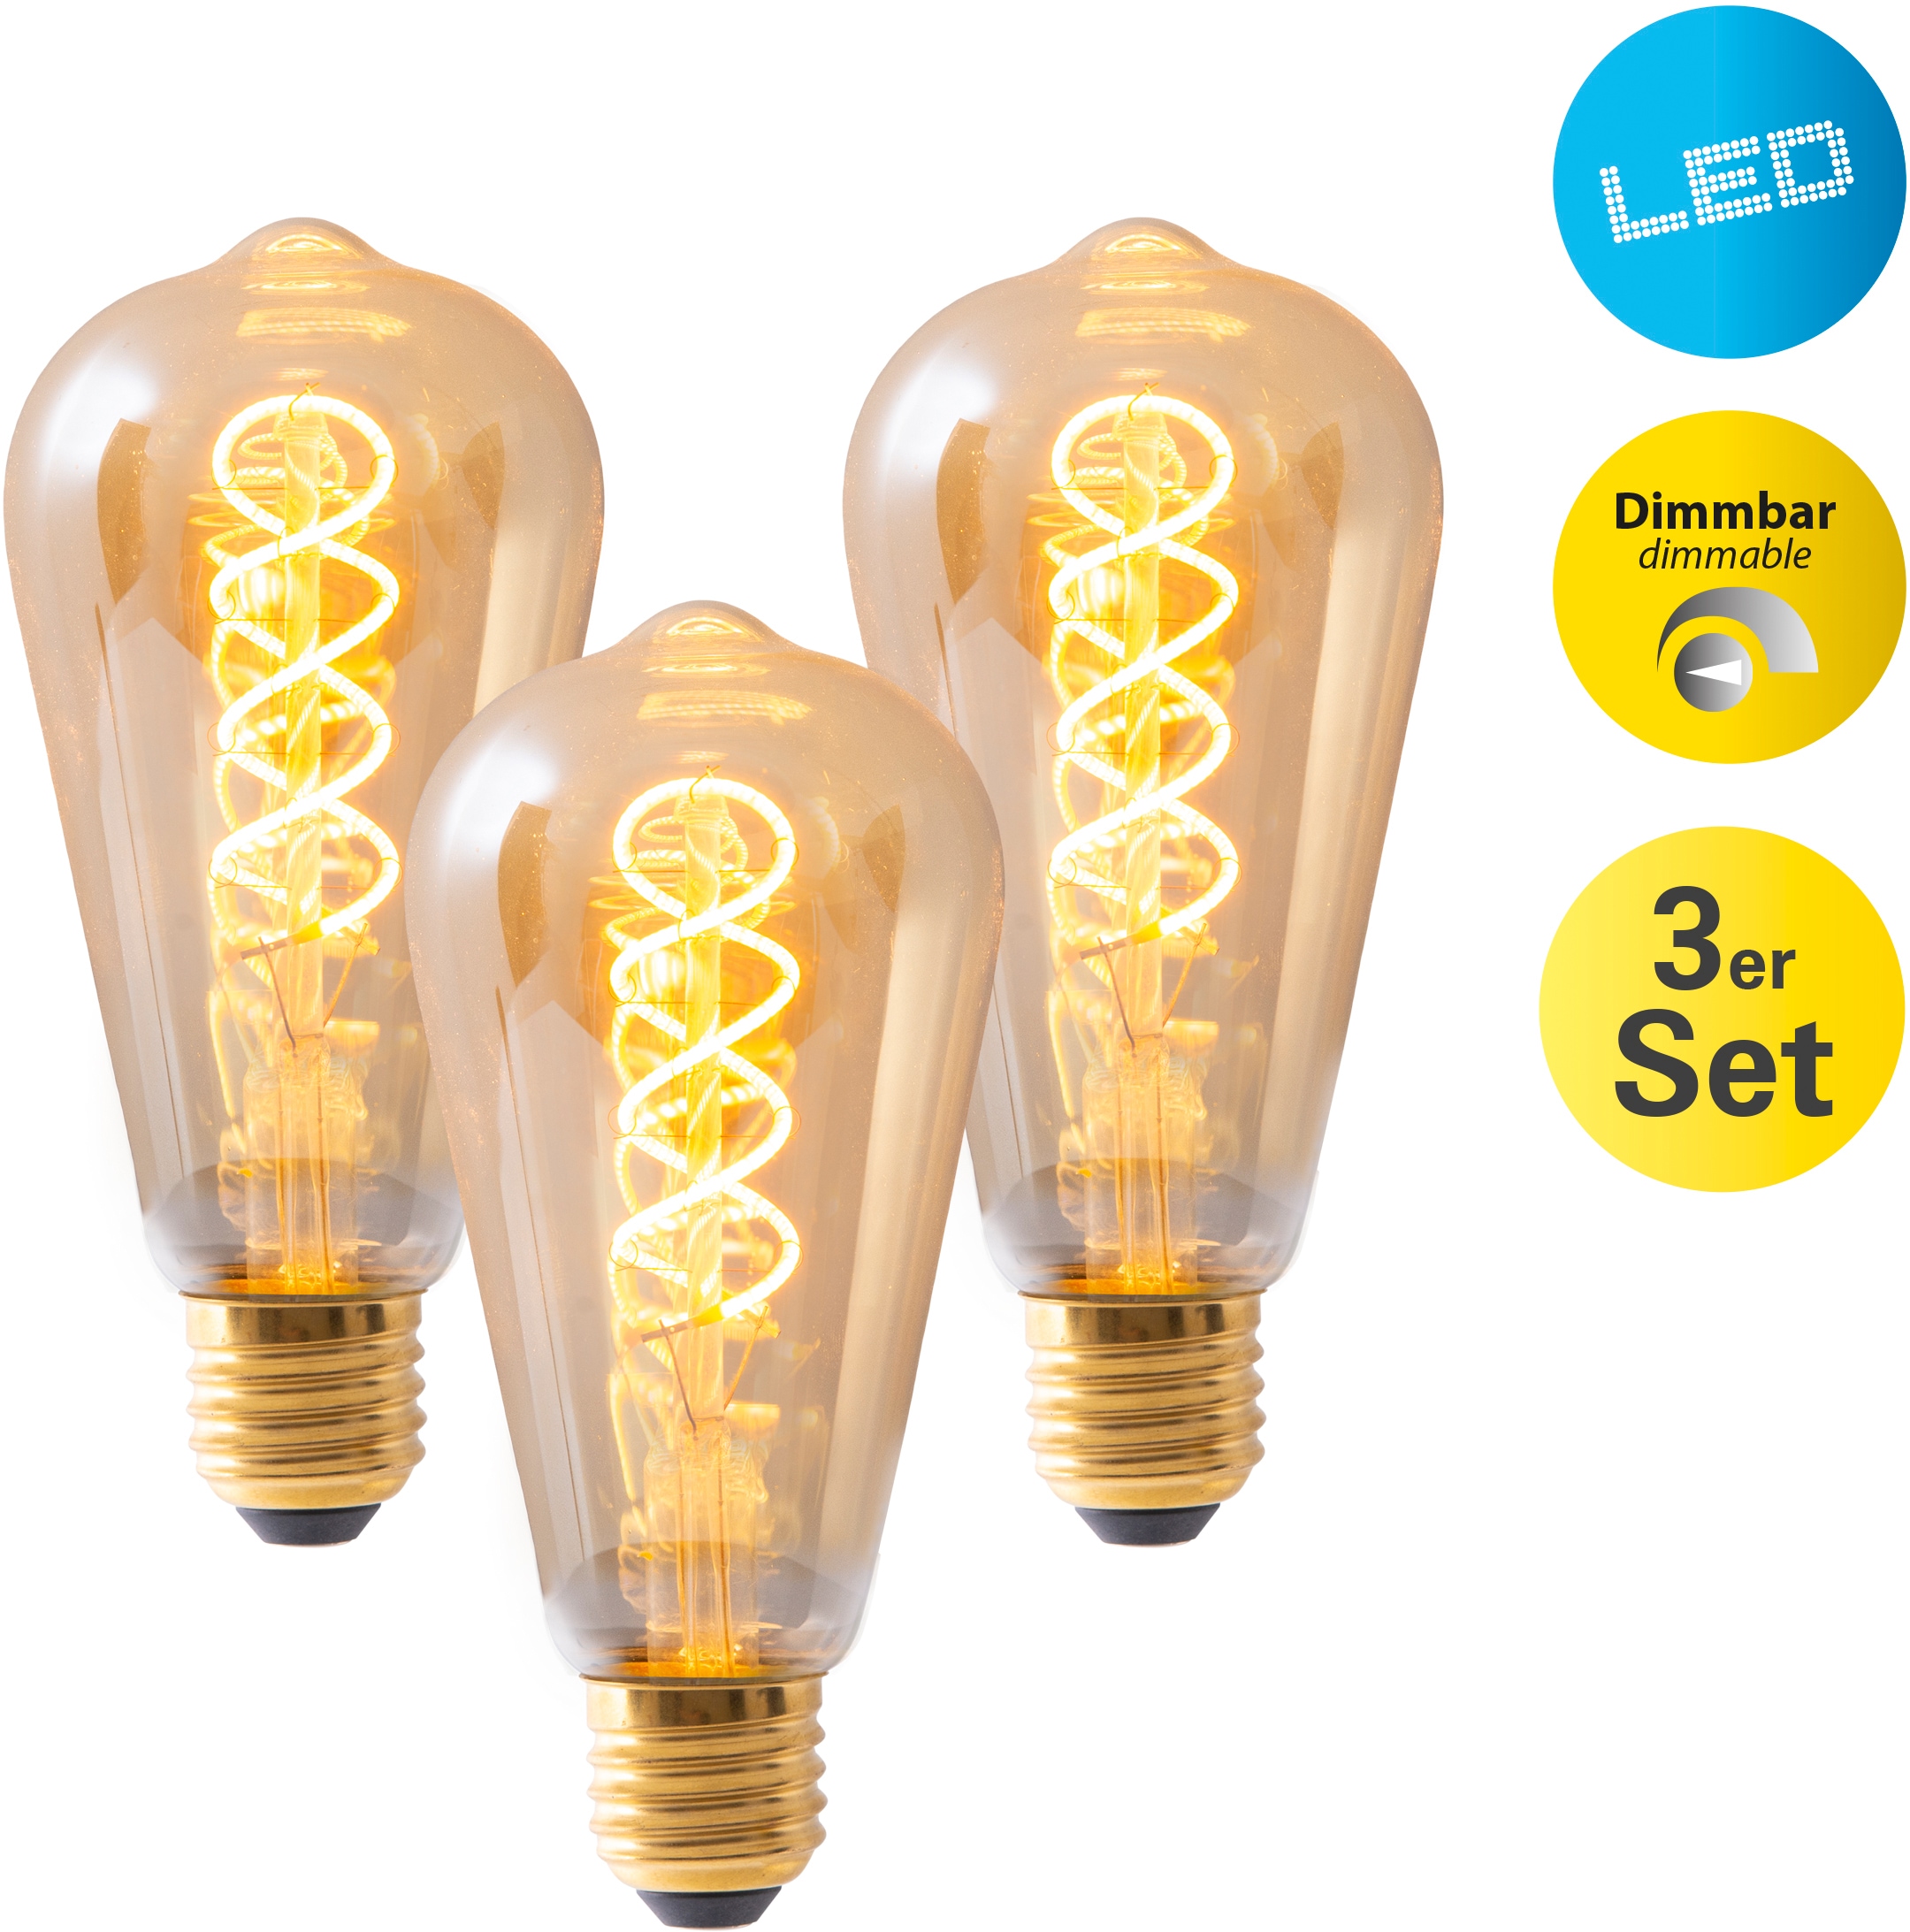 LED-Leuchtmittel »Dilly«, E27, 3 St., Warmweiß, Retro Leuchtmittel Filament